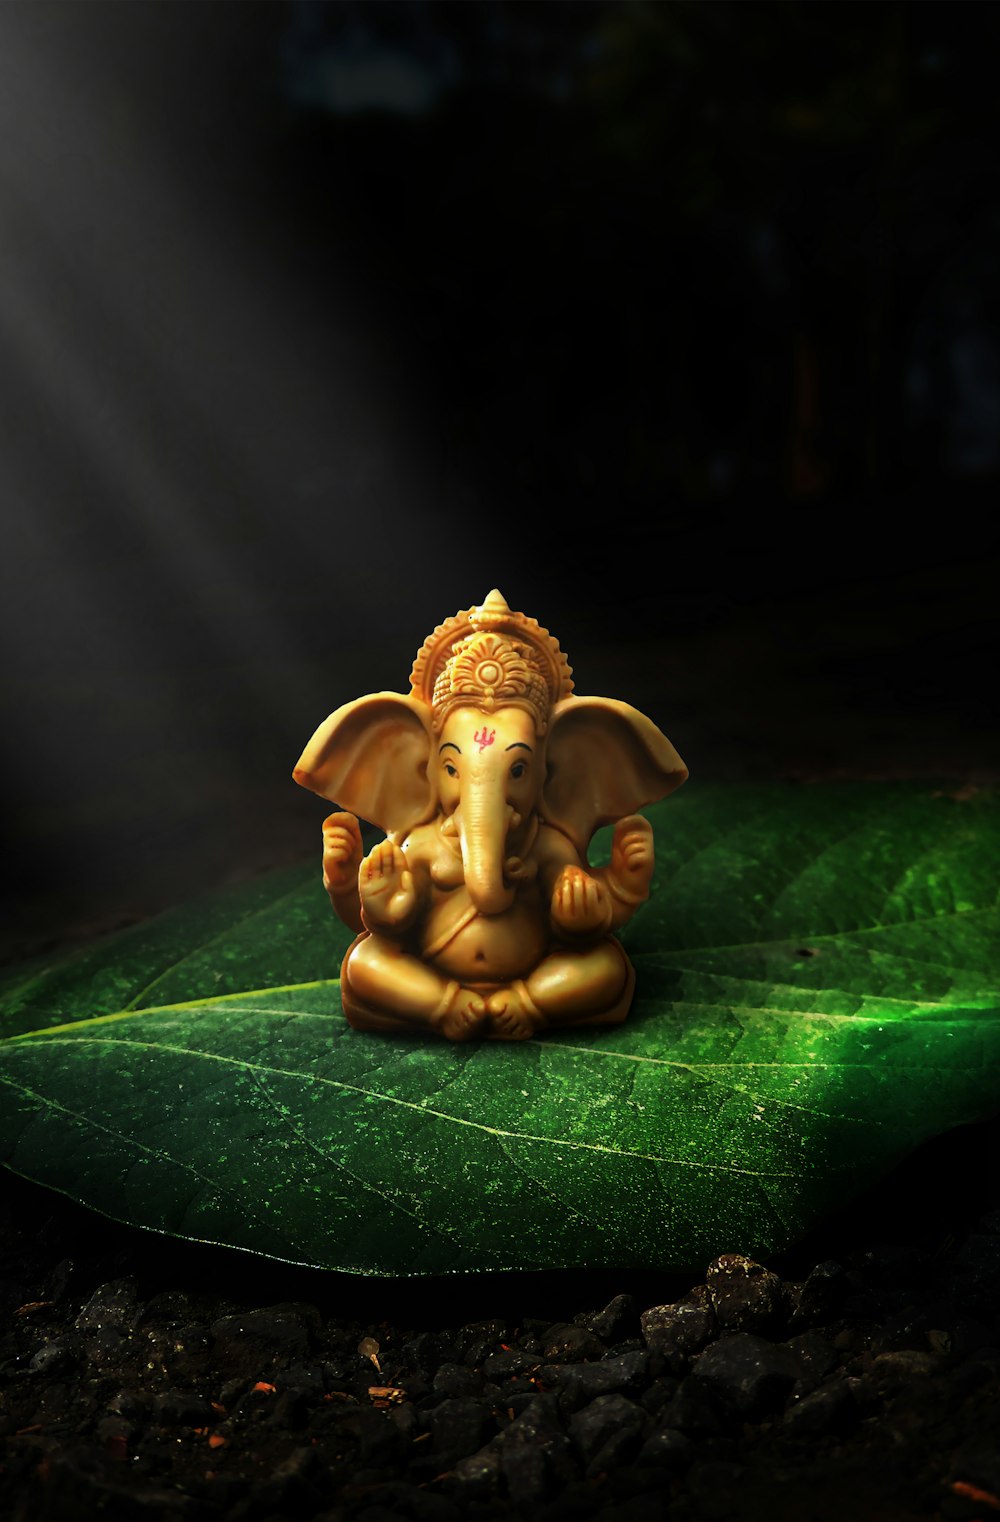 Gold dragon figurine on green leaf photo – Free India Image on ...